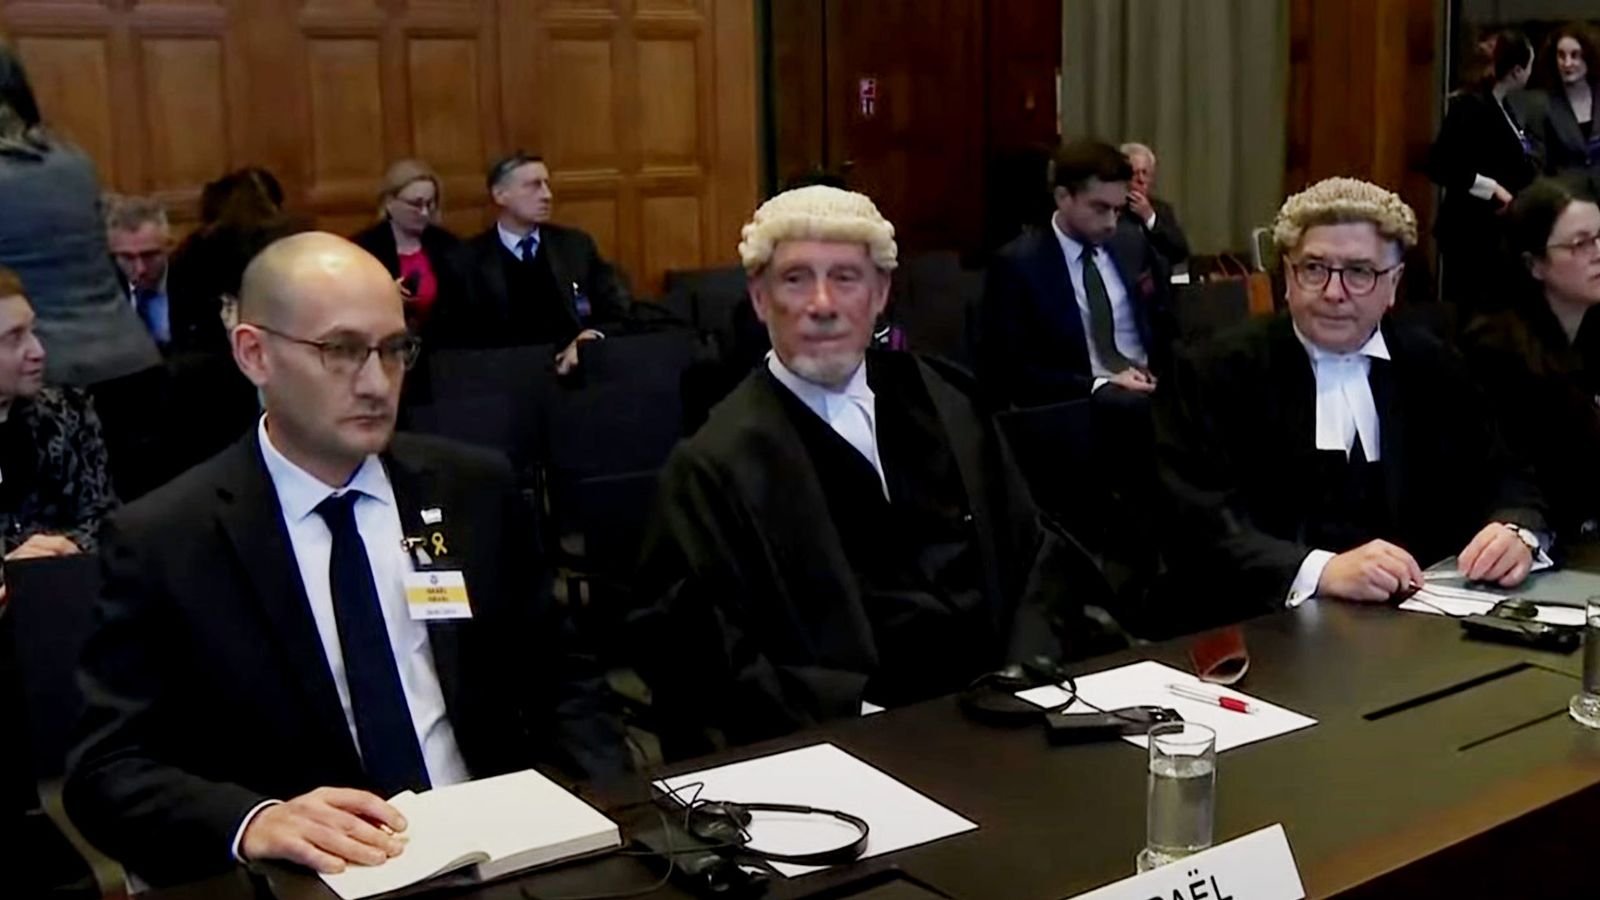 ICJ latest: World court delivering interim ruling on Israel genocide case | World News